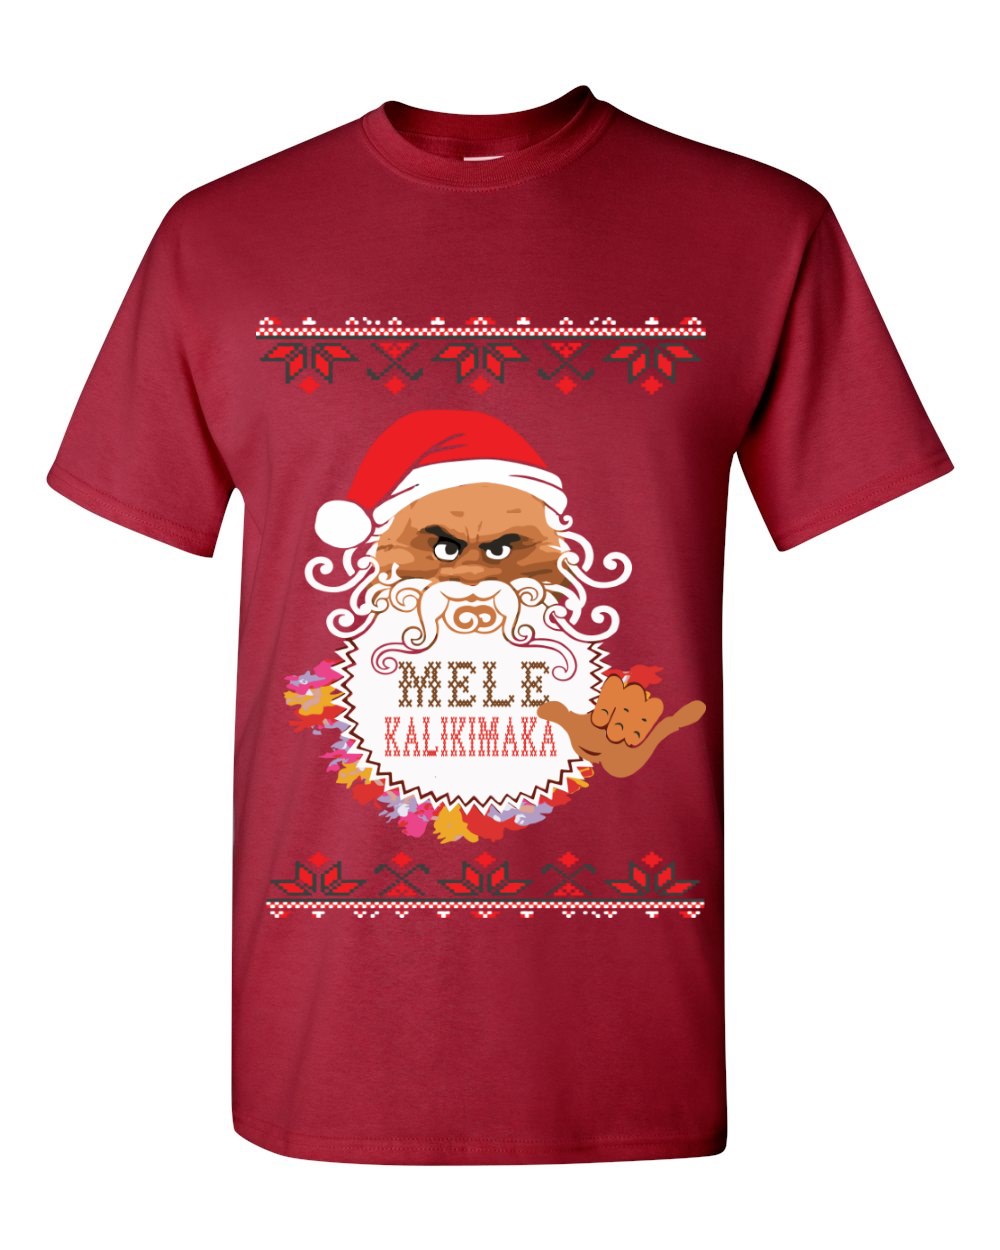 BORD Apparel Hawaiian Santa Mele Kalikimaka Ugly Christmas T-shirt